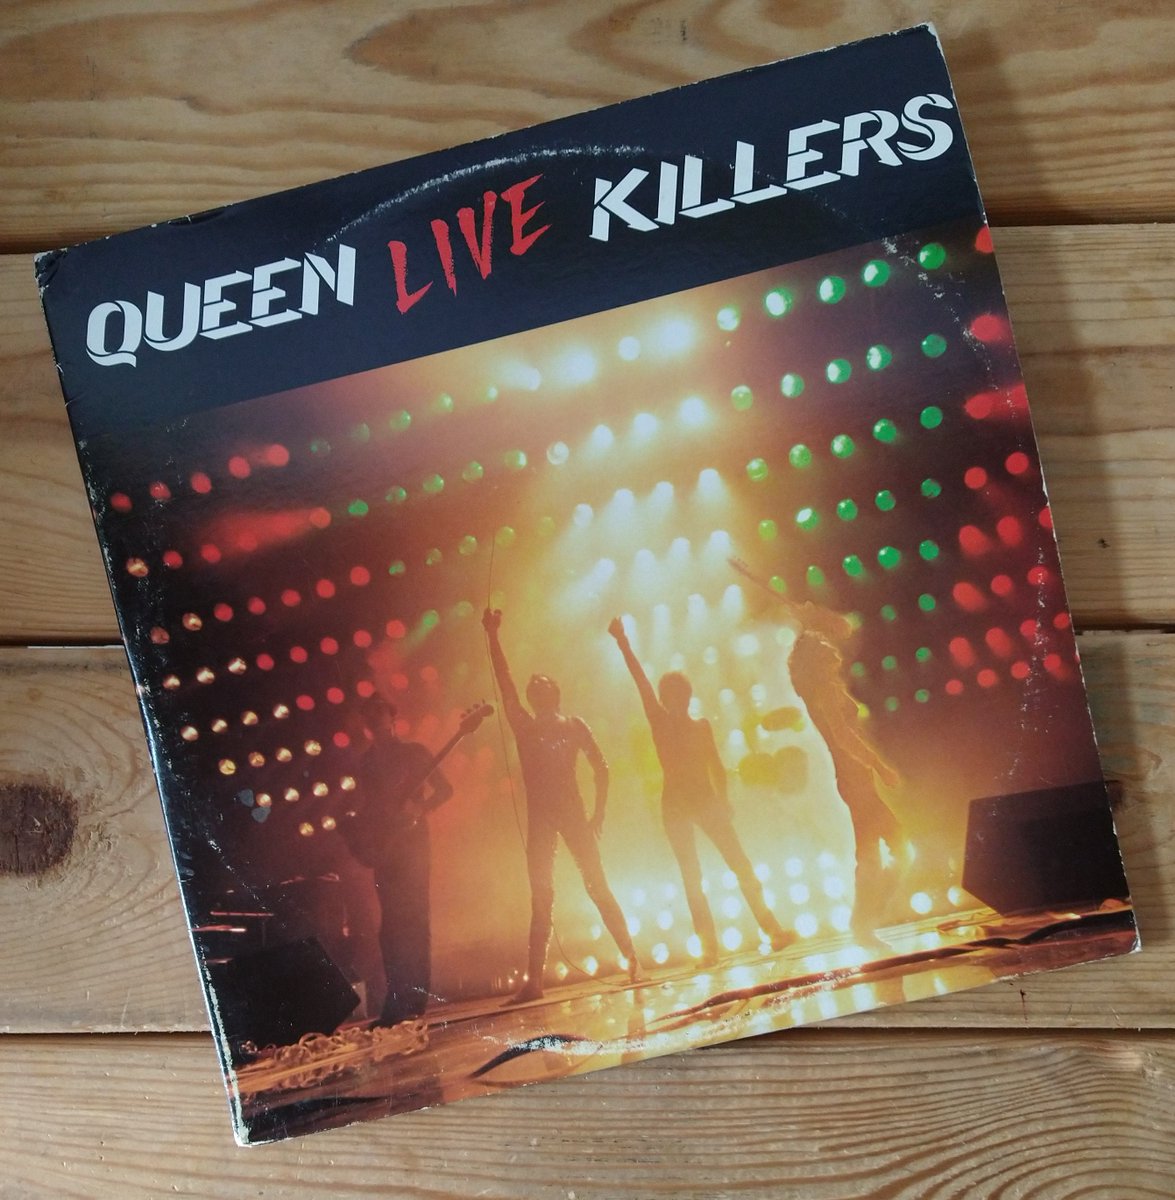 Spinning-#Queen #vinyl #vinylcommunity #vinylcollector #vinylcollection #vinylrecords #live